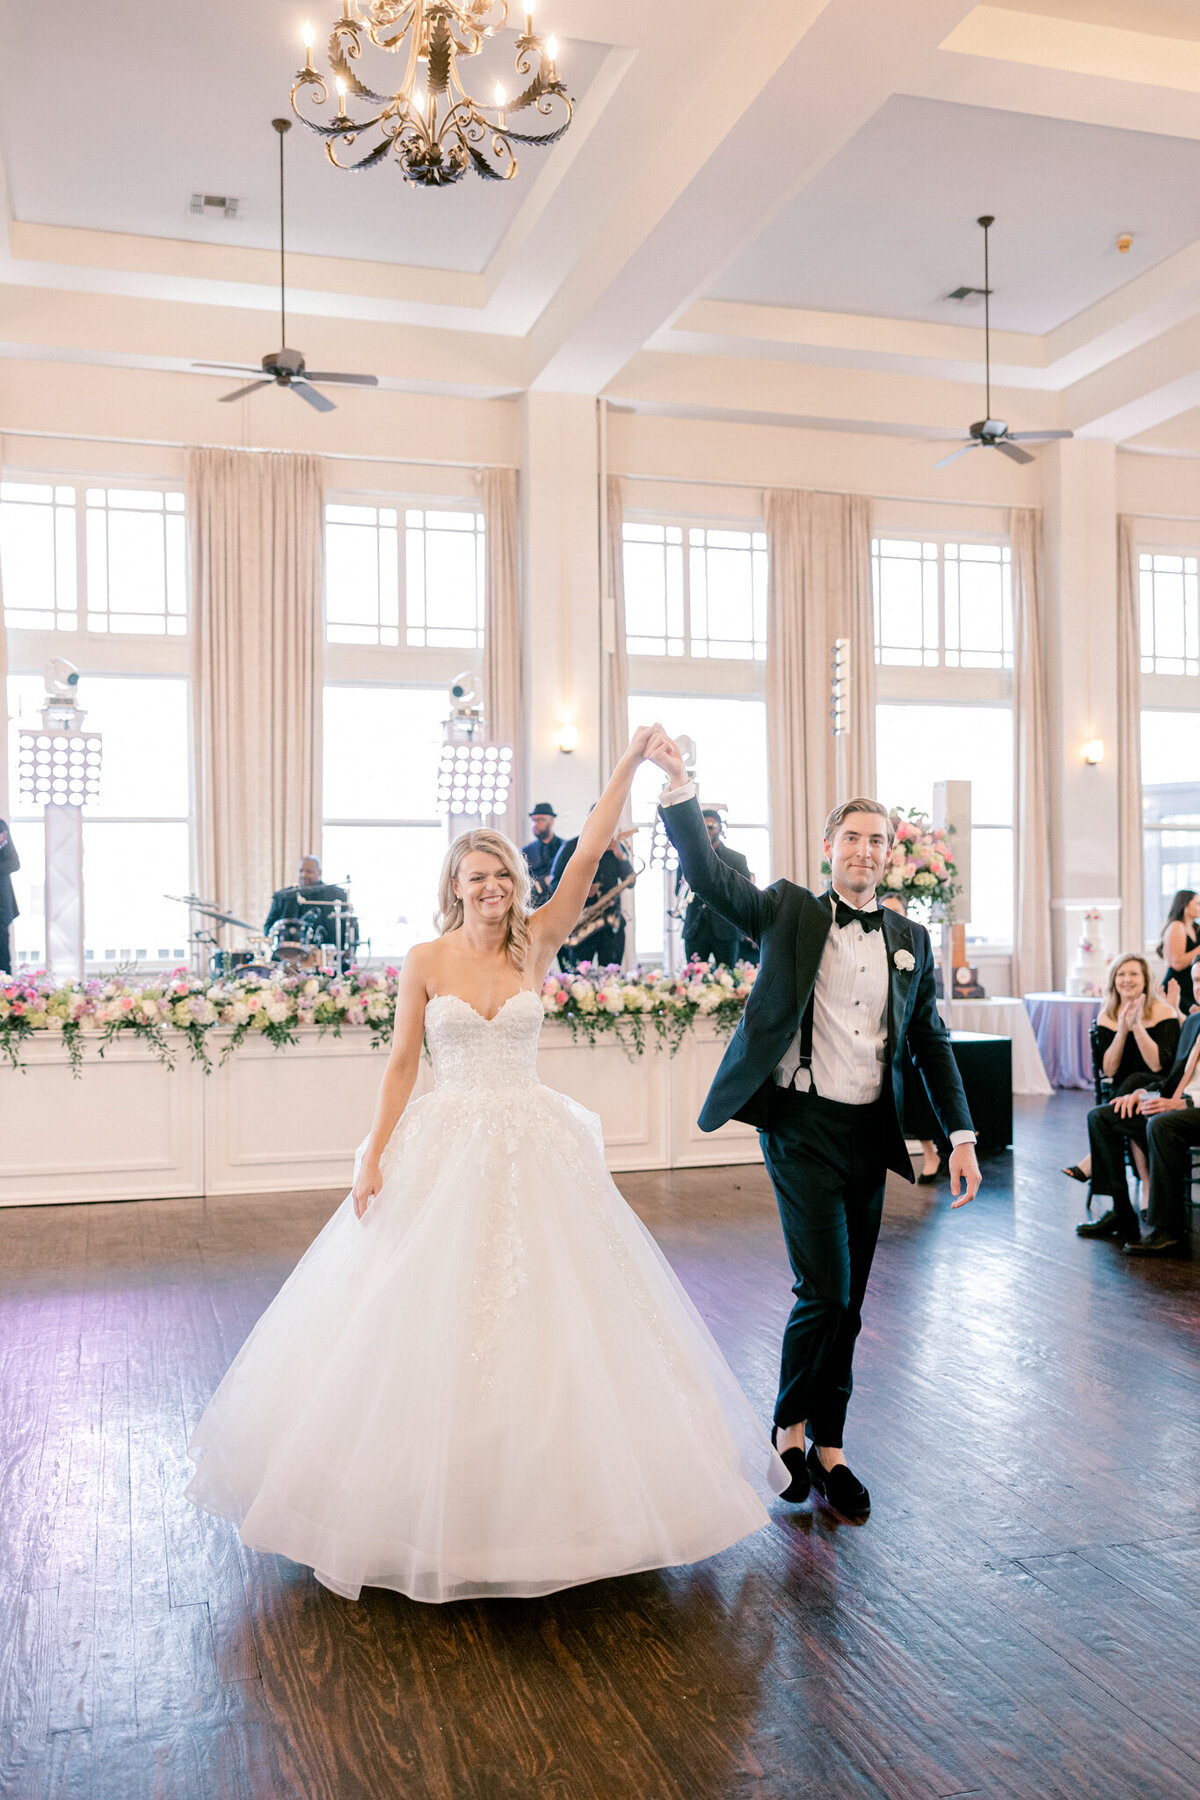 Shelby & Thomas's Wedding at HPUMC The Room on Main | Dallas Wedding Photographer | Sami Kathryn Photography-197